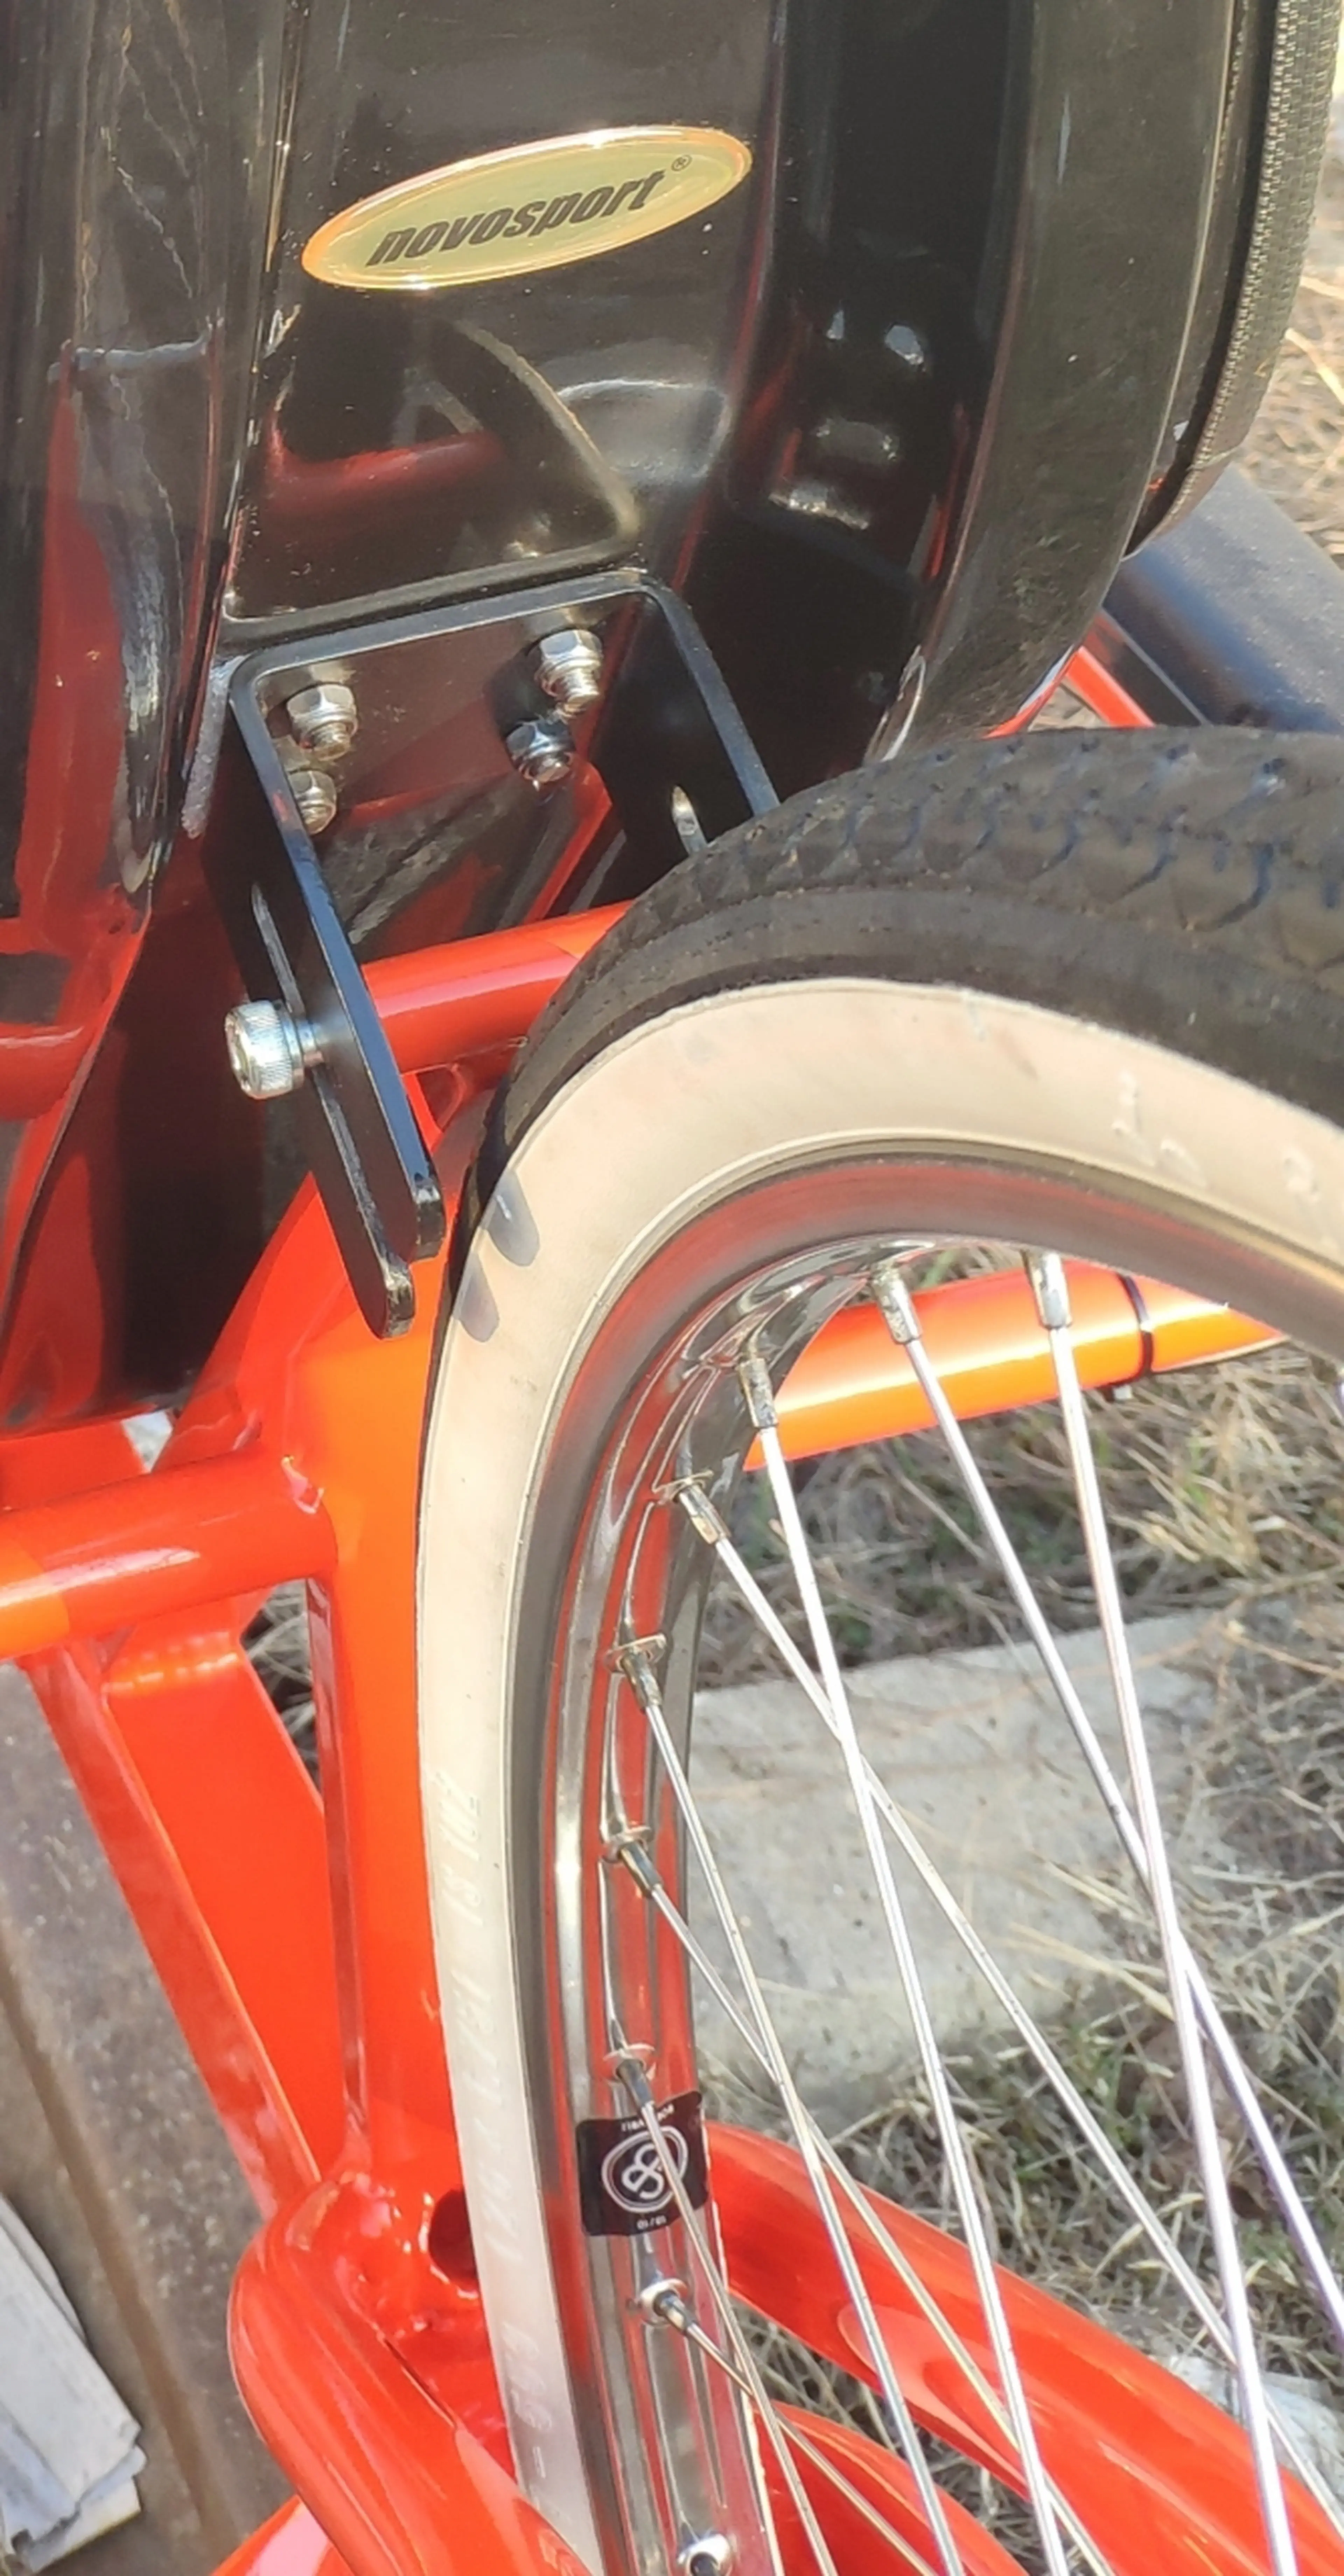 4. Railbike handcrafted